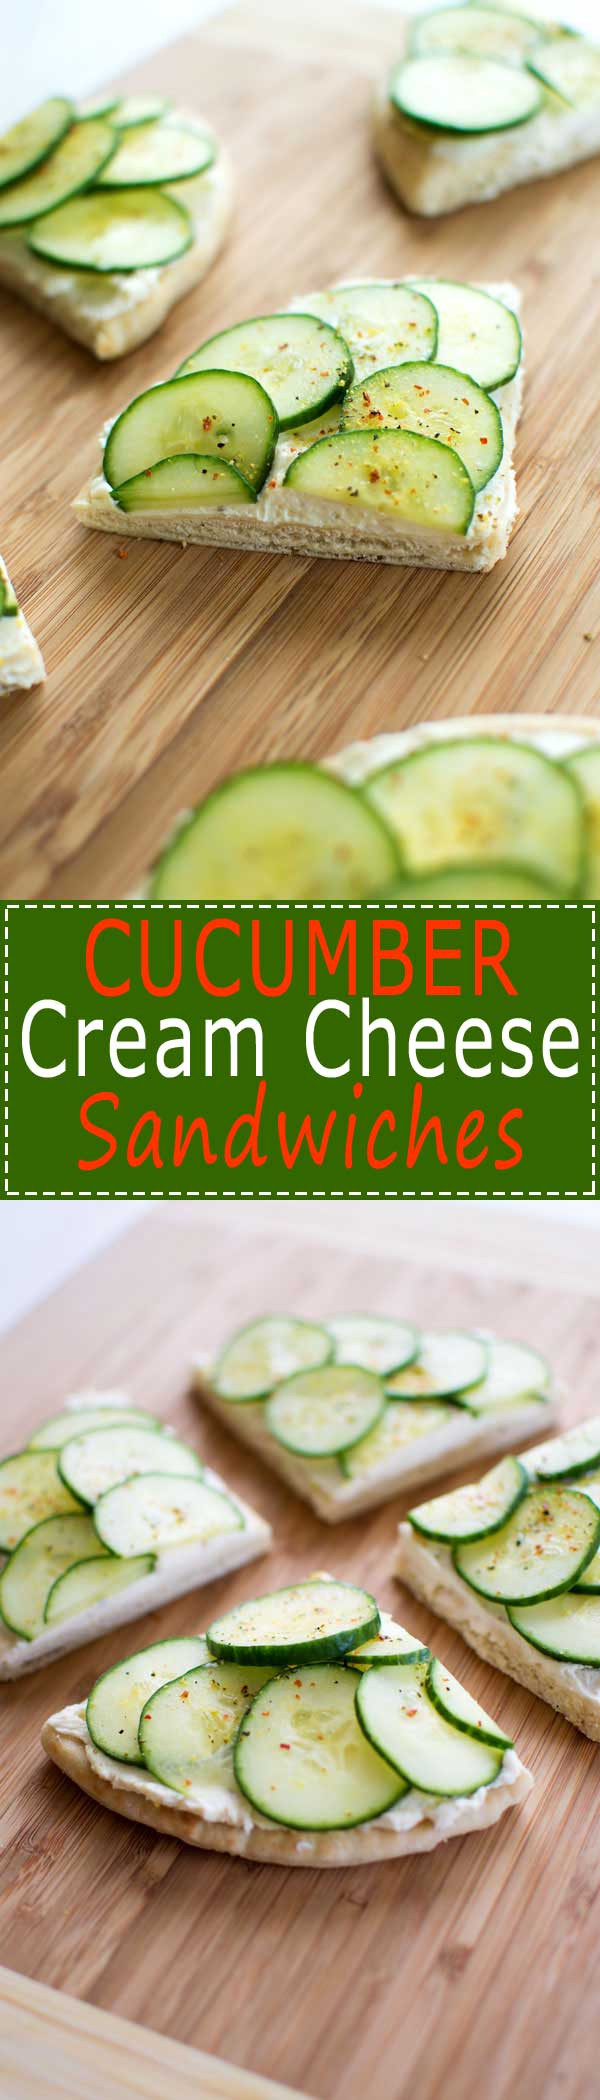 Cucumber Sandwiches With Cream Cheese
 Cucumber Cream Cheese Sandwiches Kitchen Gid